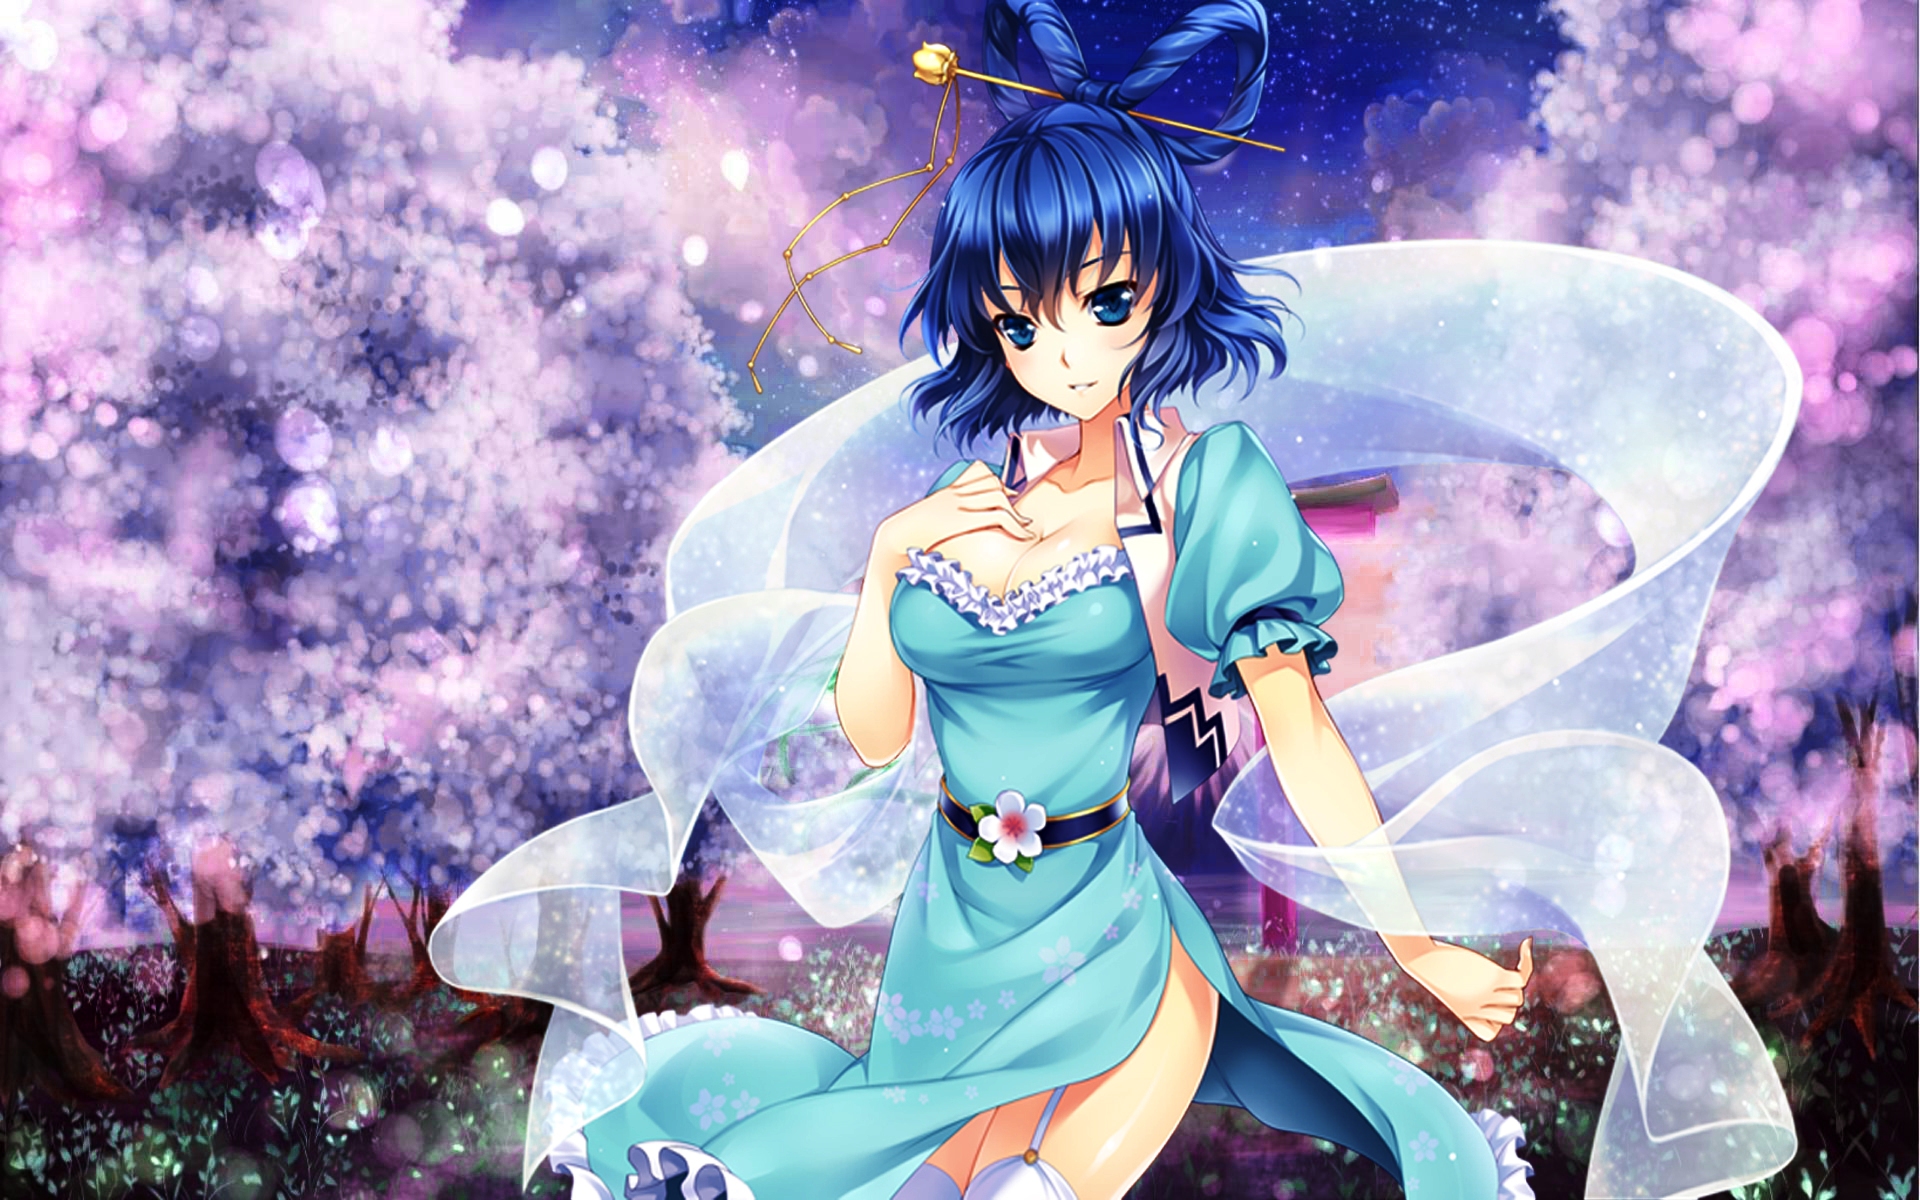 Anime 1920x1200 anime girls anime Kaku Seiga Touhou blue hair fantasy art fantasy girl colorful dress trees blue eyes standing